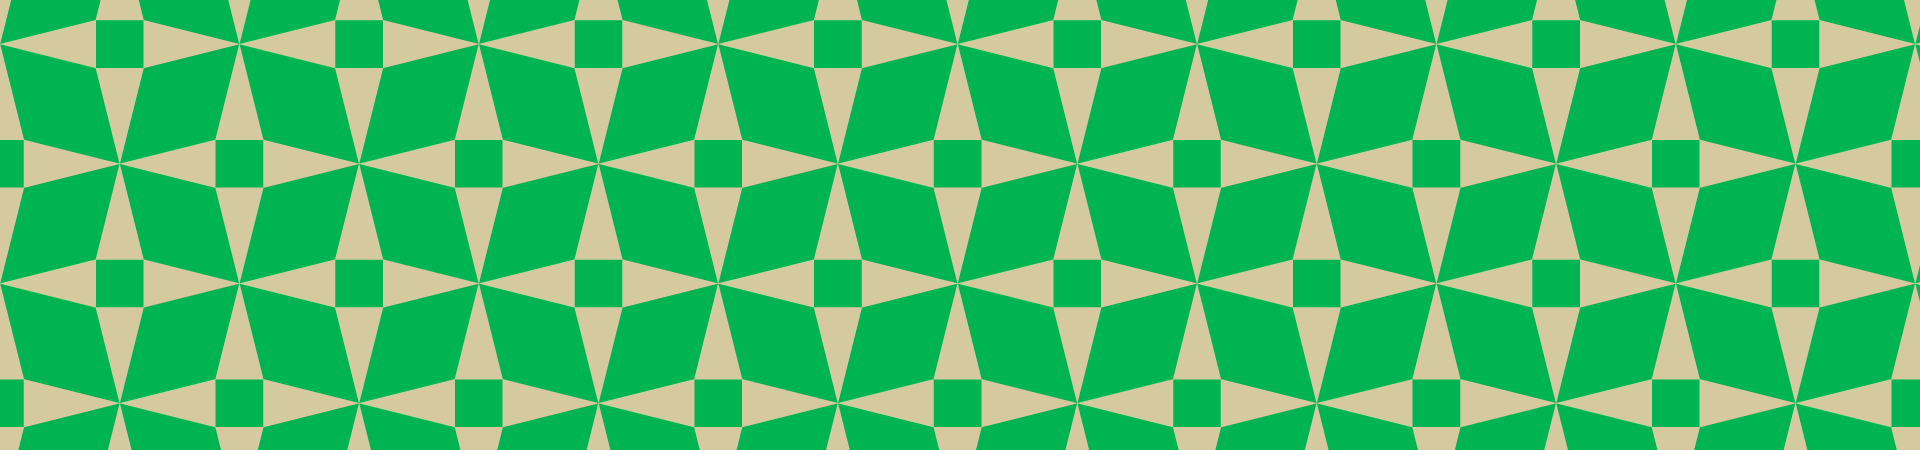  A decorative green and khaki pattern. 